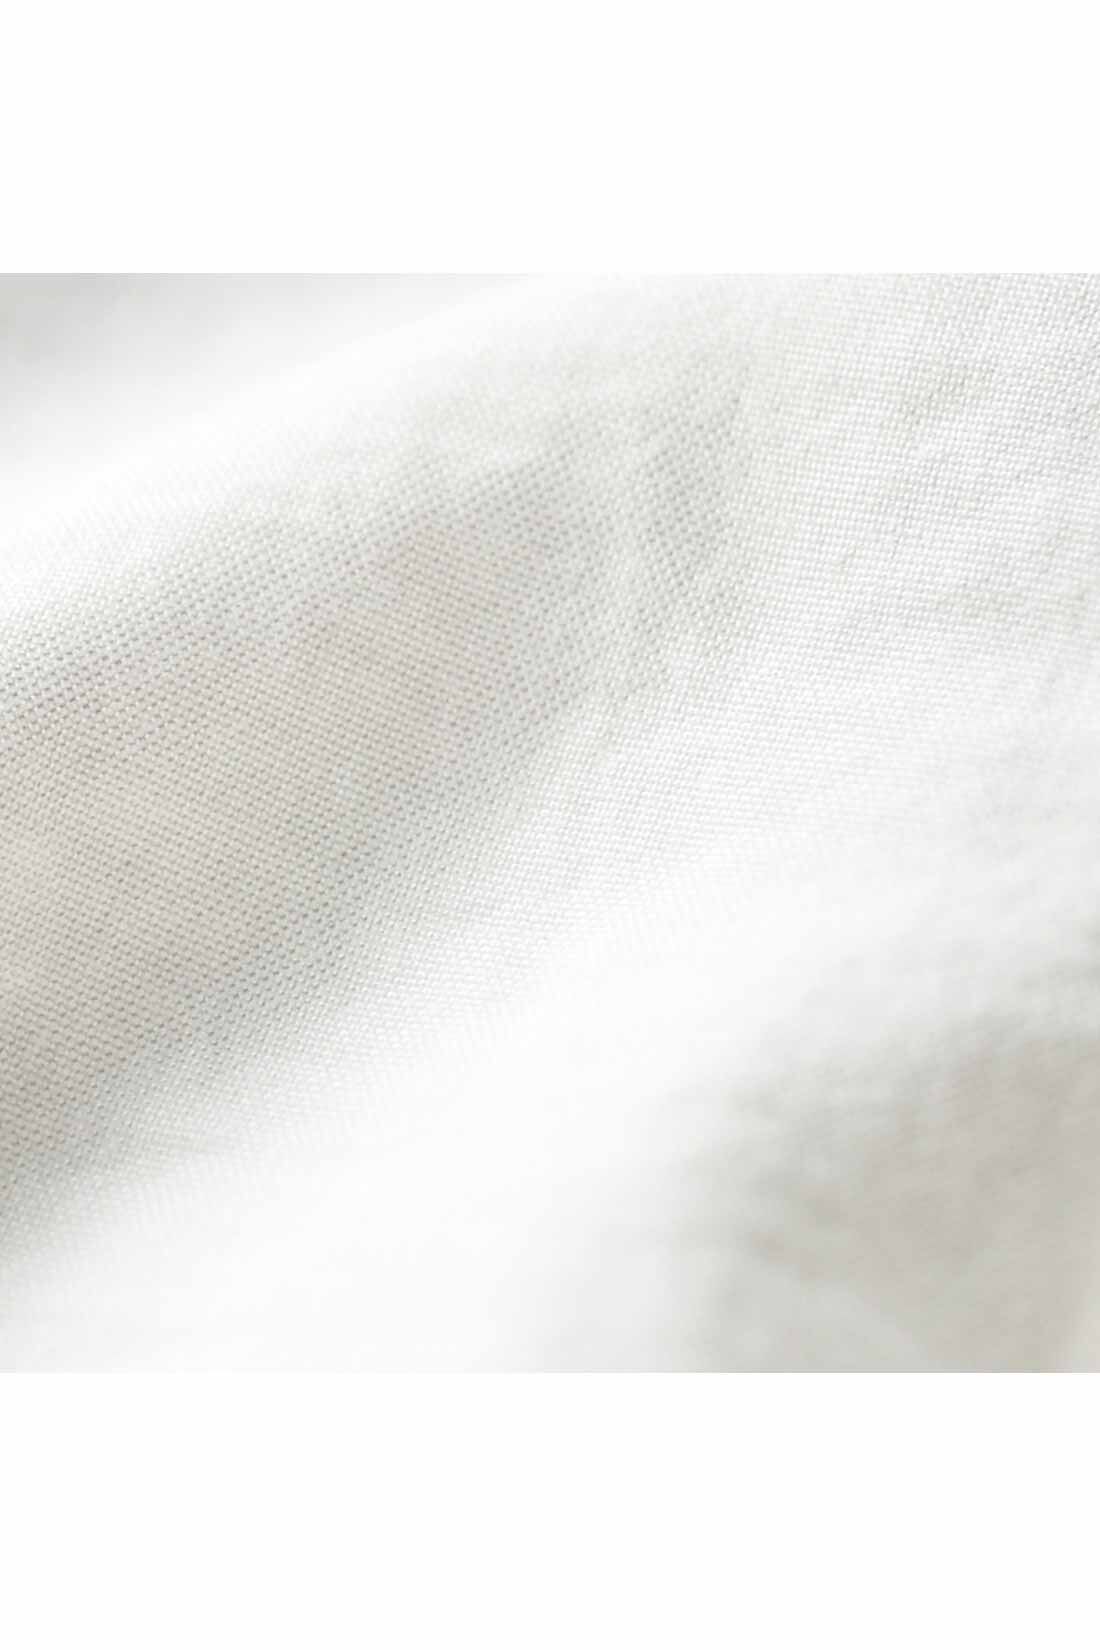 IEDIT|IEDIT[イディット]　繊細な表情がエレガントなリバーレース遣いブラウス〈オフホワイト〉|ヴィンテージのような風合いのある表面感の布はく素材。